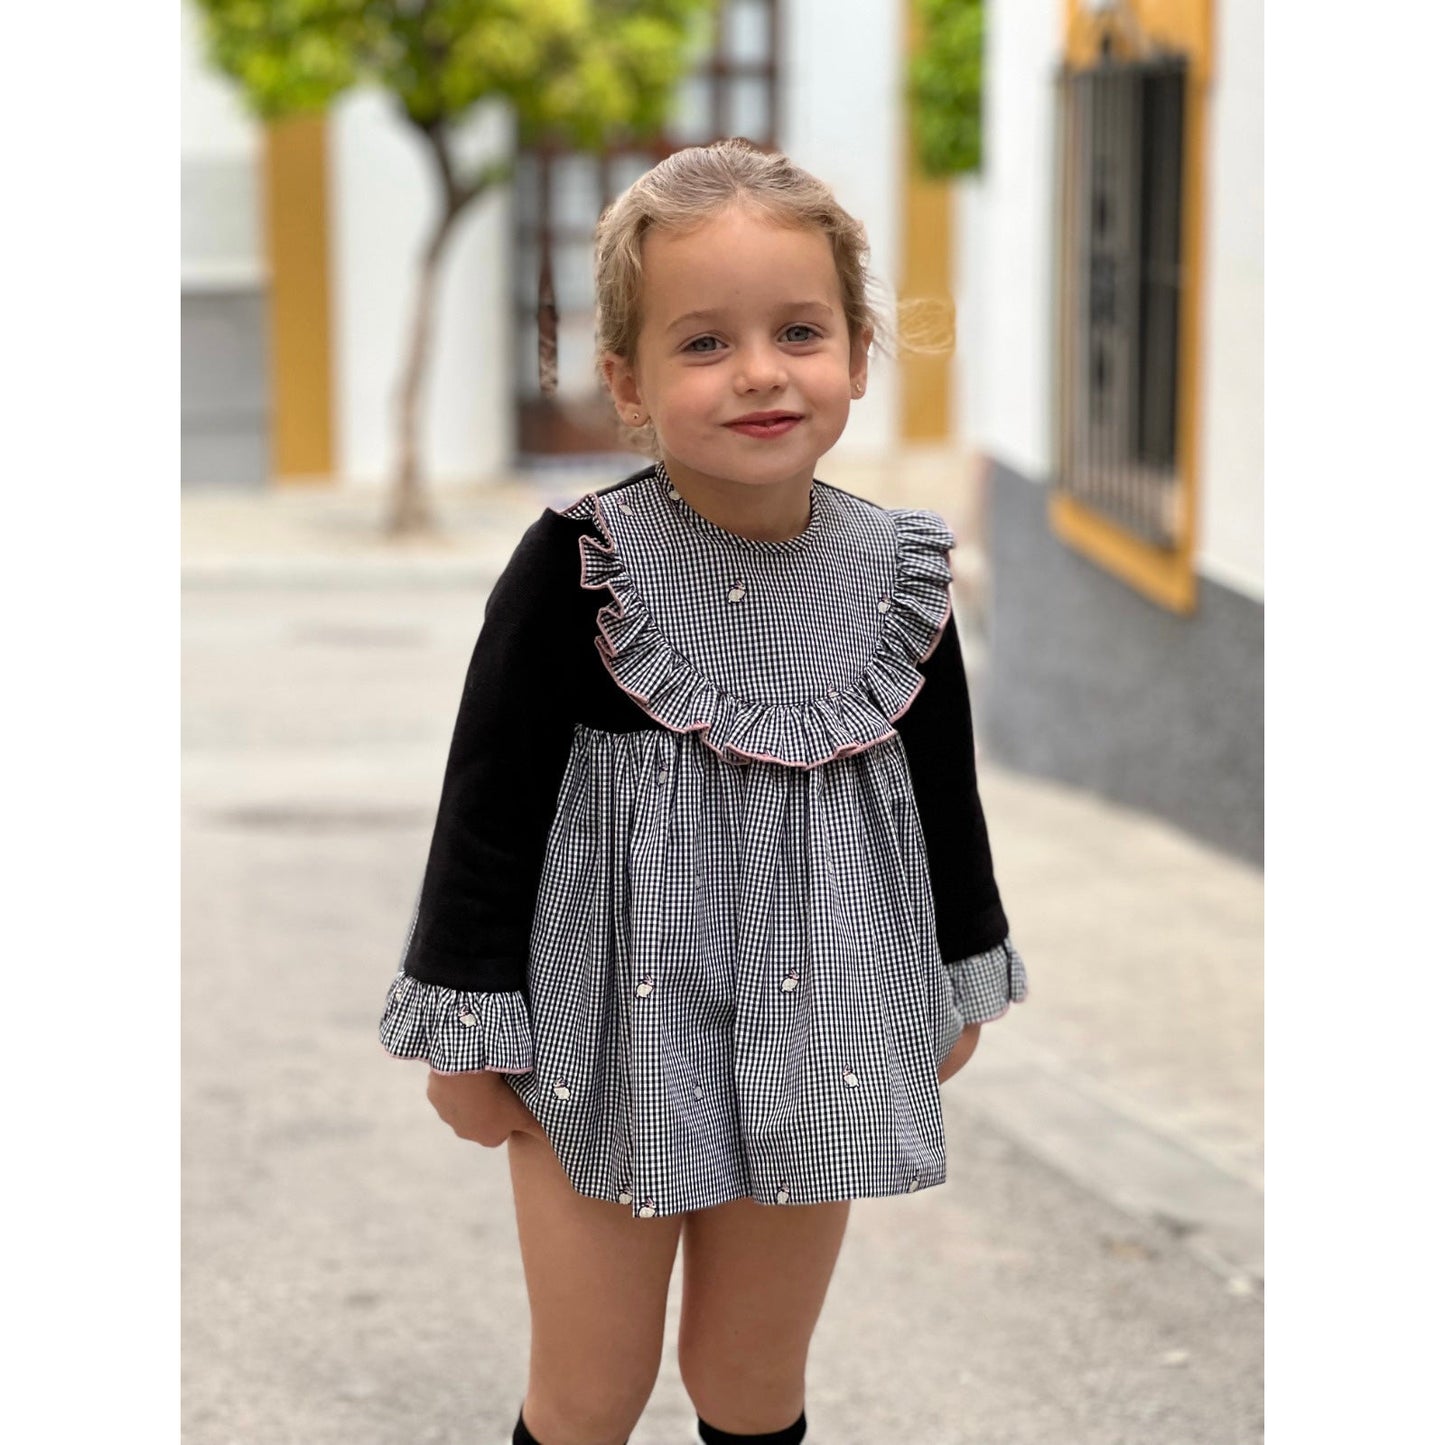 La Peppa Moda Infantil Spanish Clothing – Adora